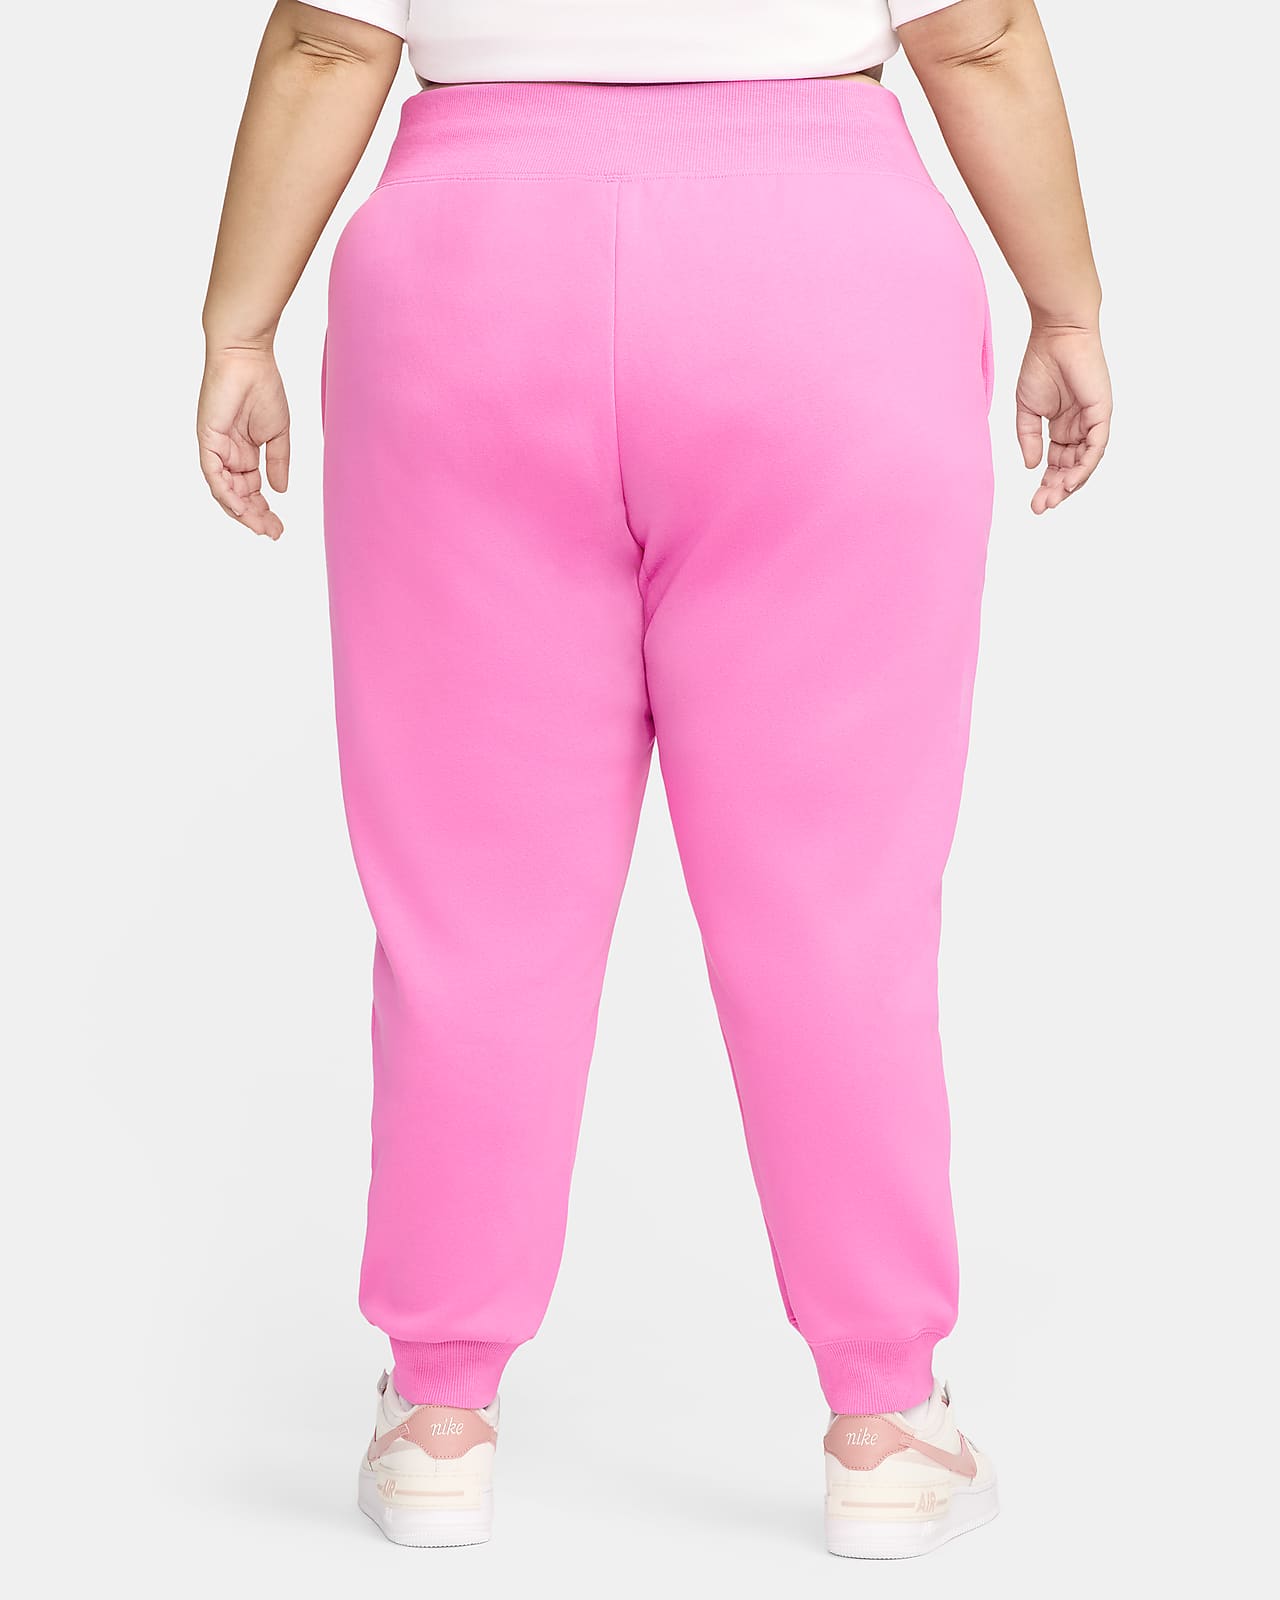 Nike Womens Phoenix Fleece Pants - Pink